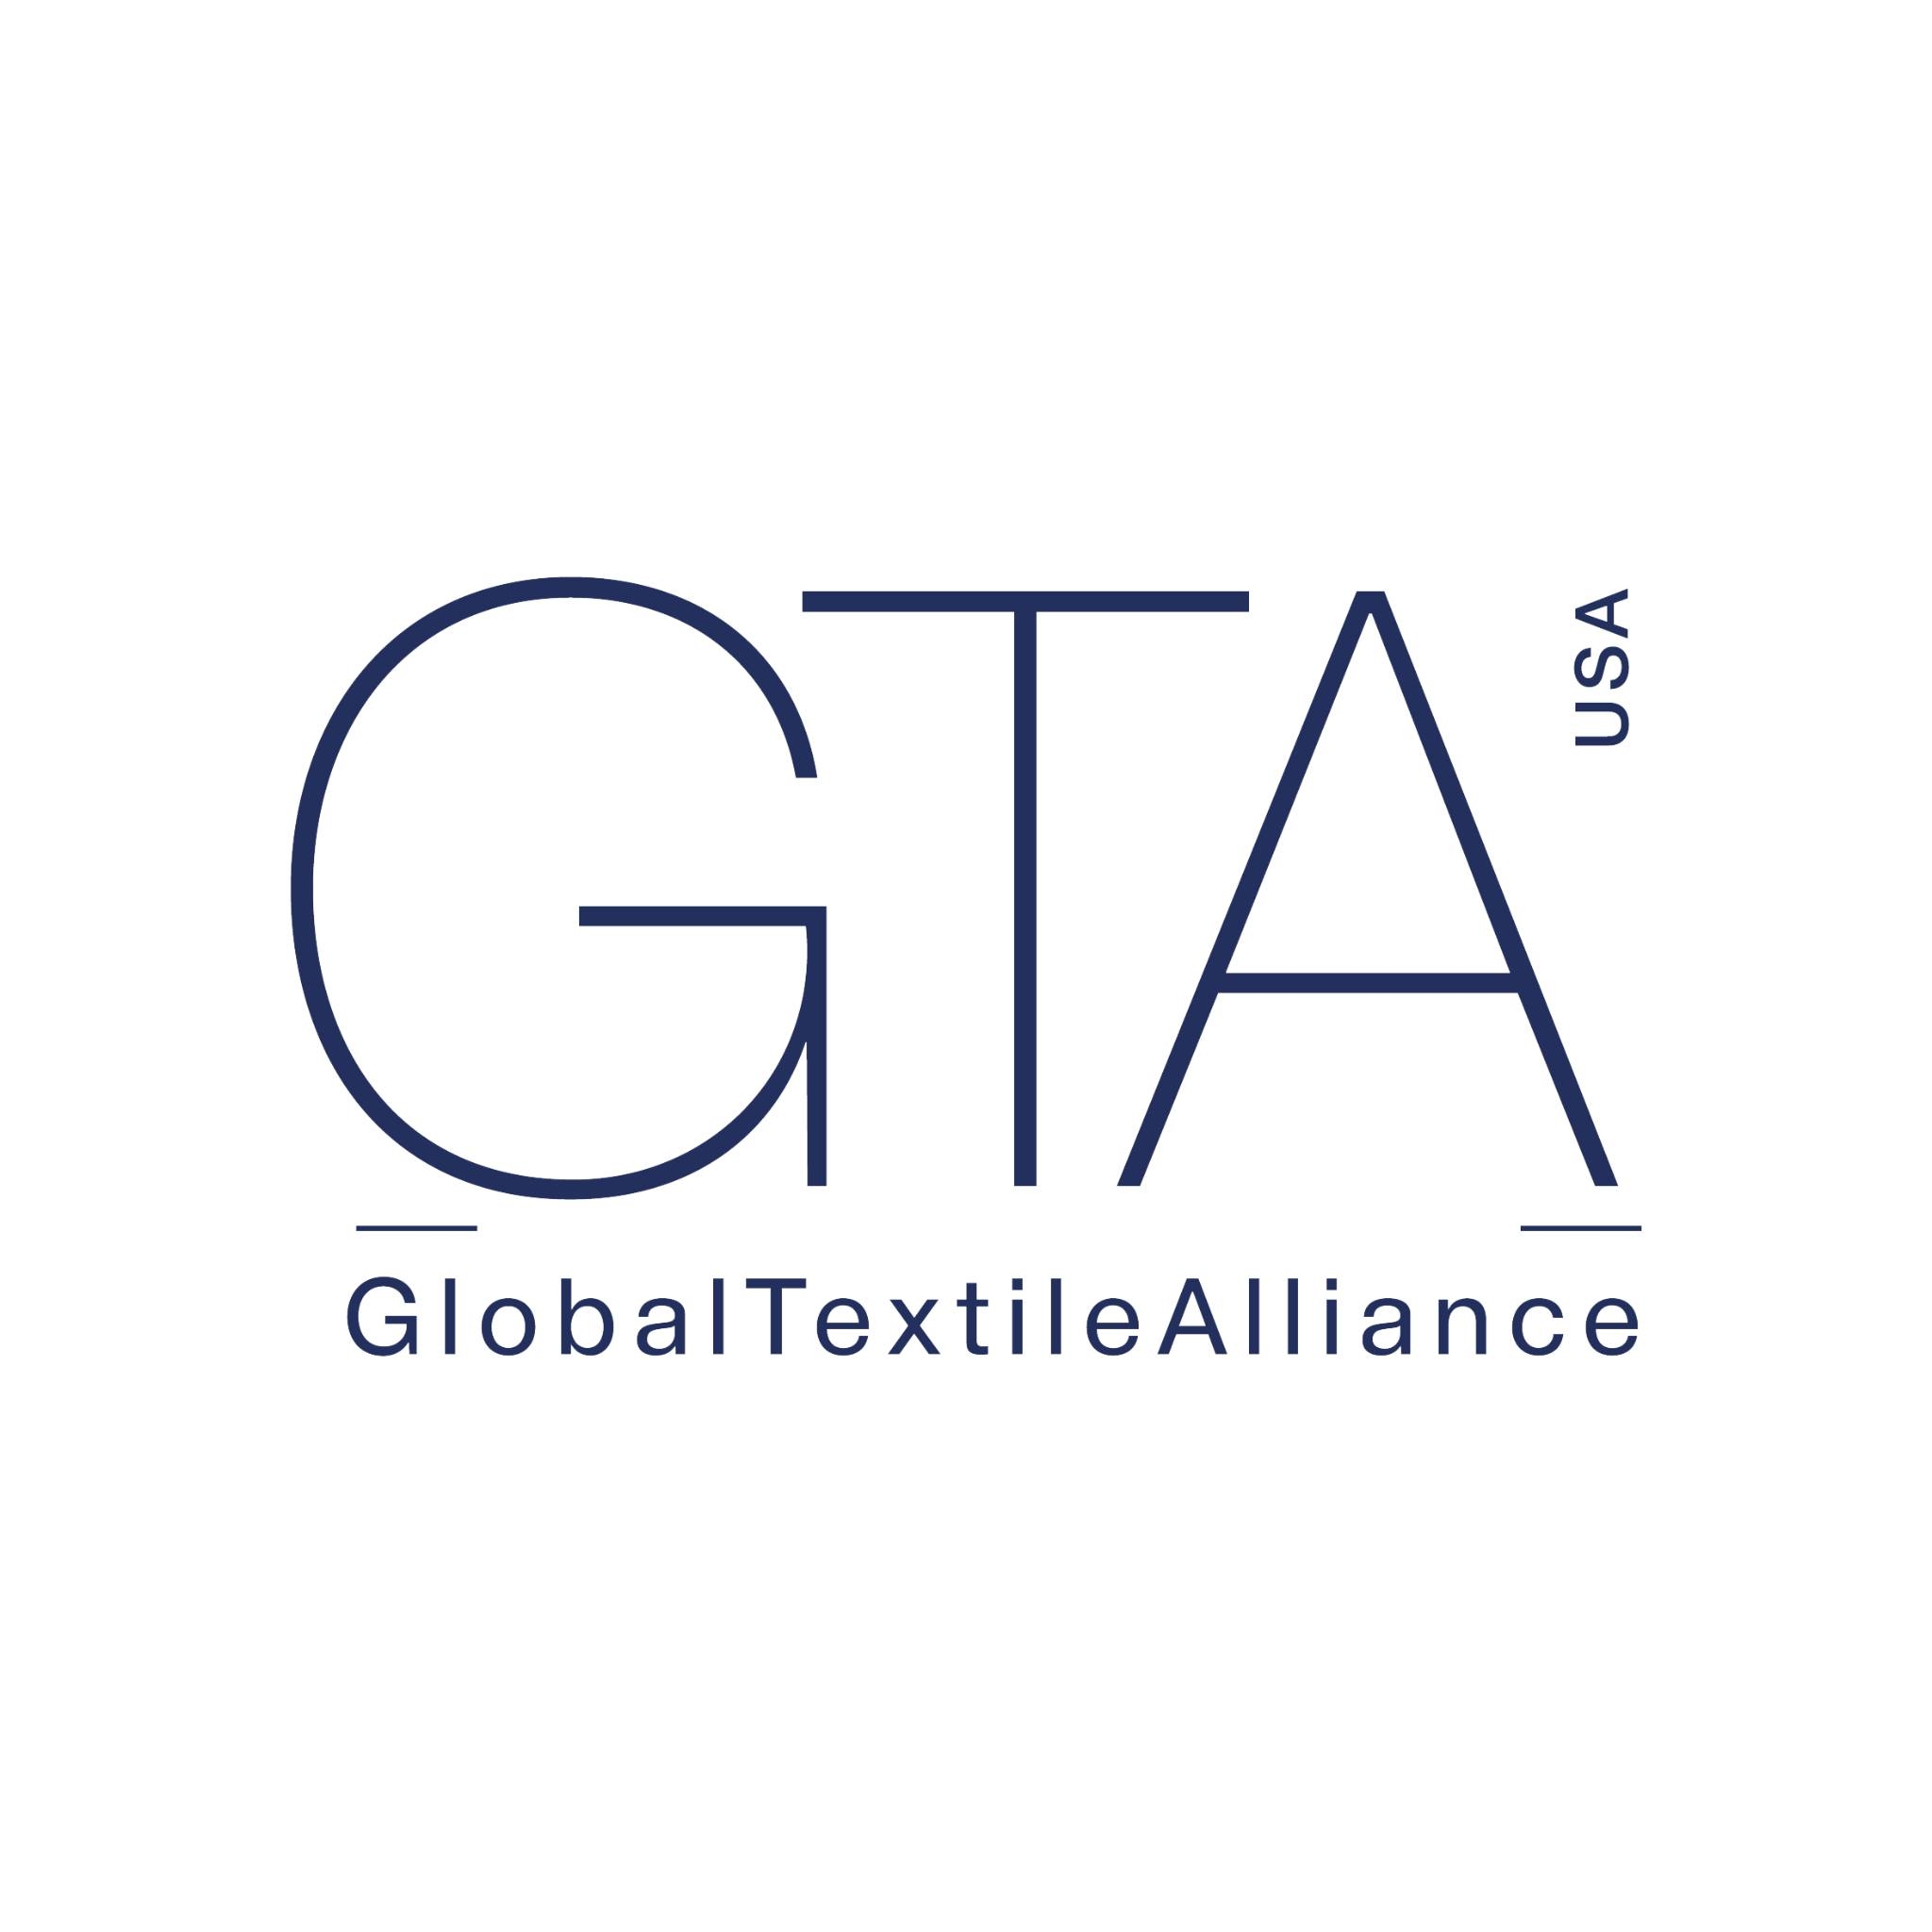 Global Textile Alliance